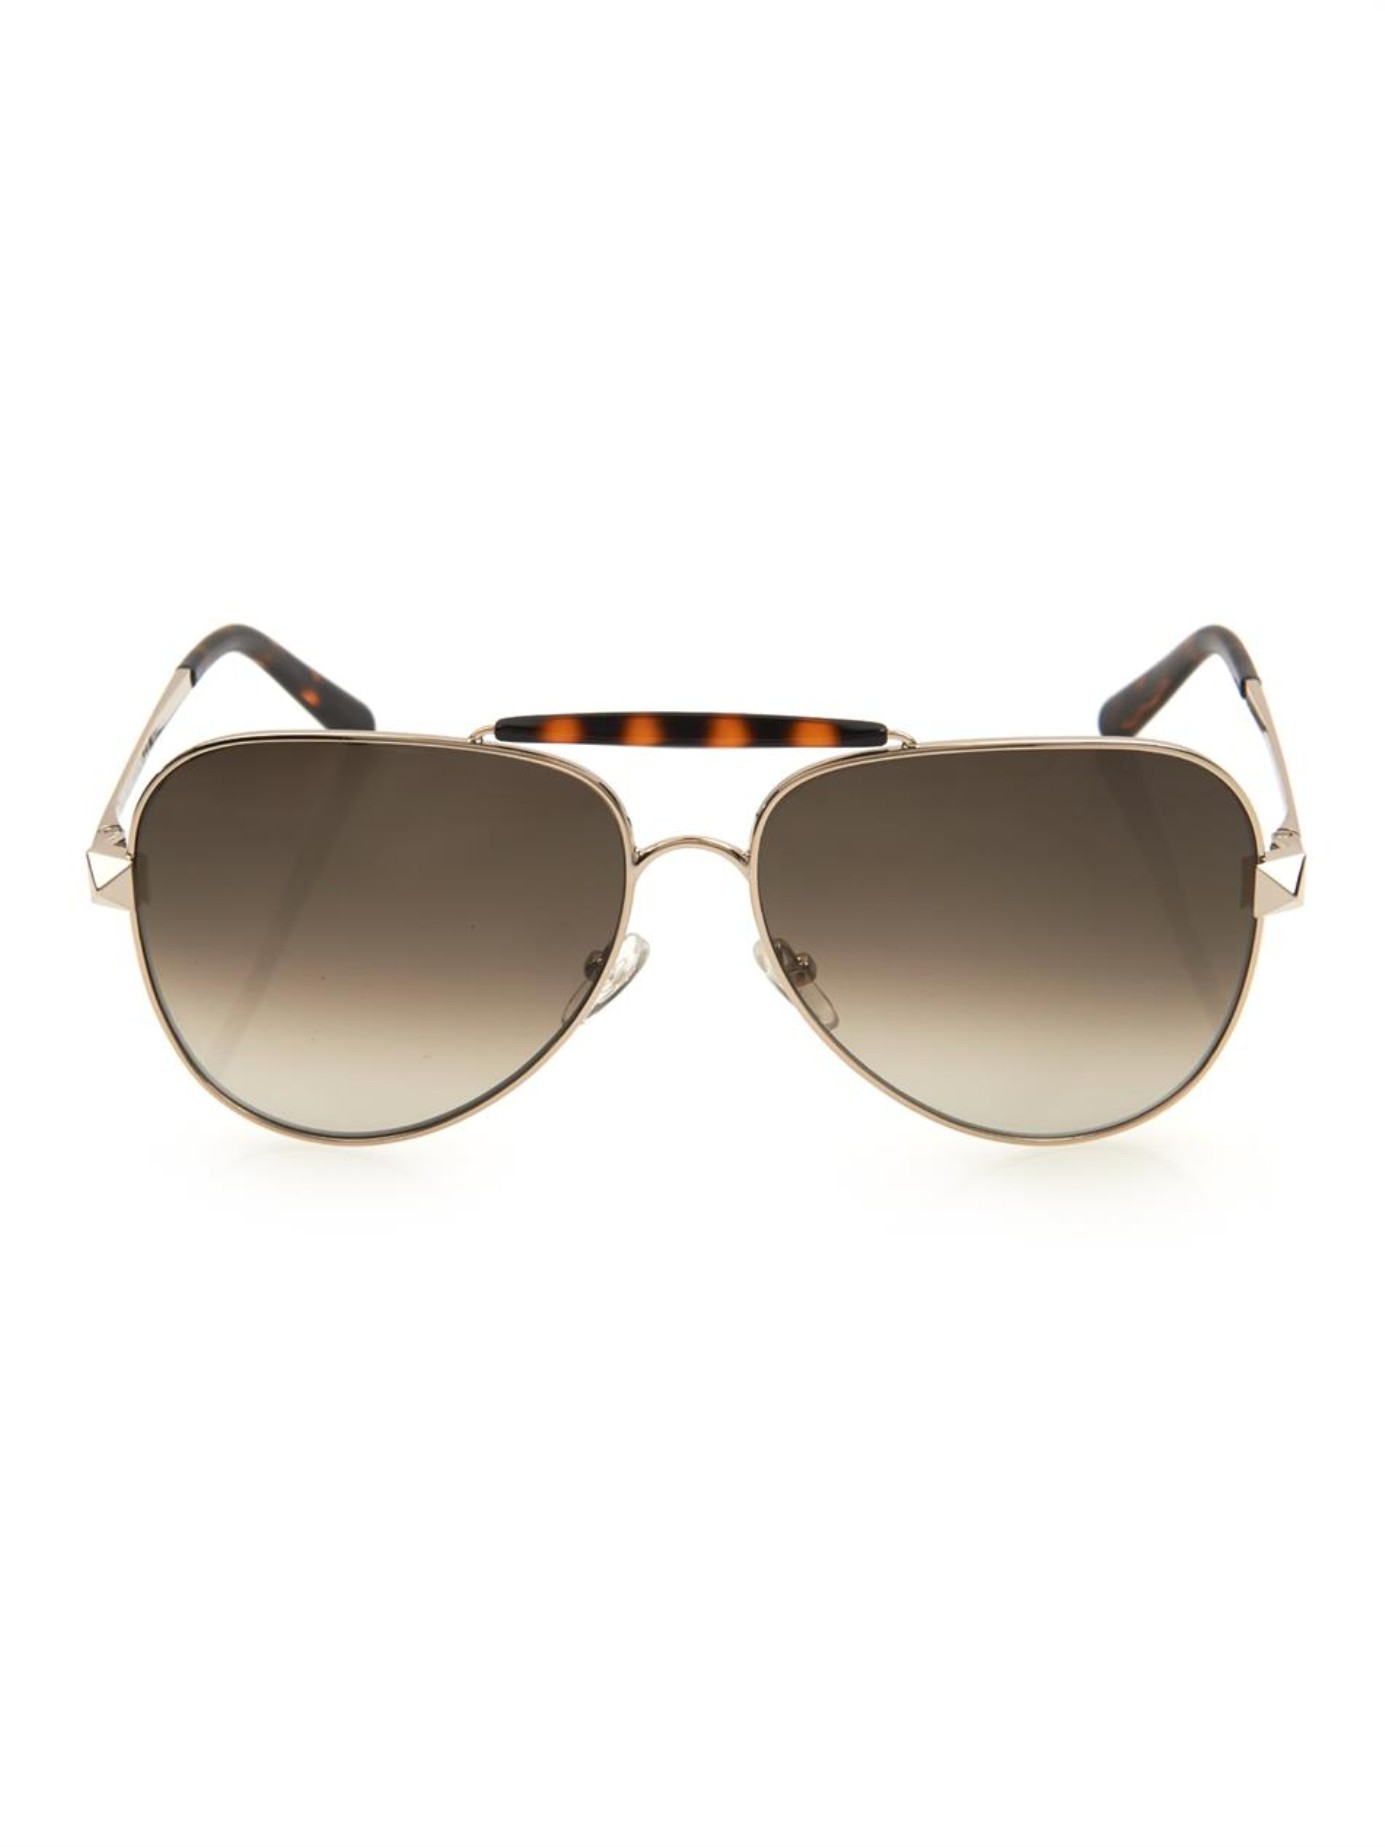 Lyst - Valentino Aviator-Style Sunglasses in Brown for Men